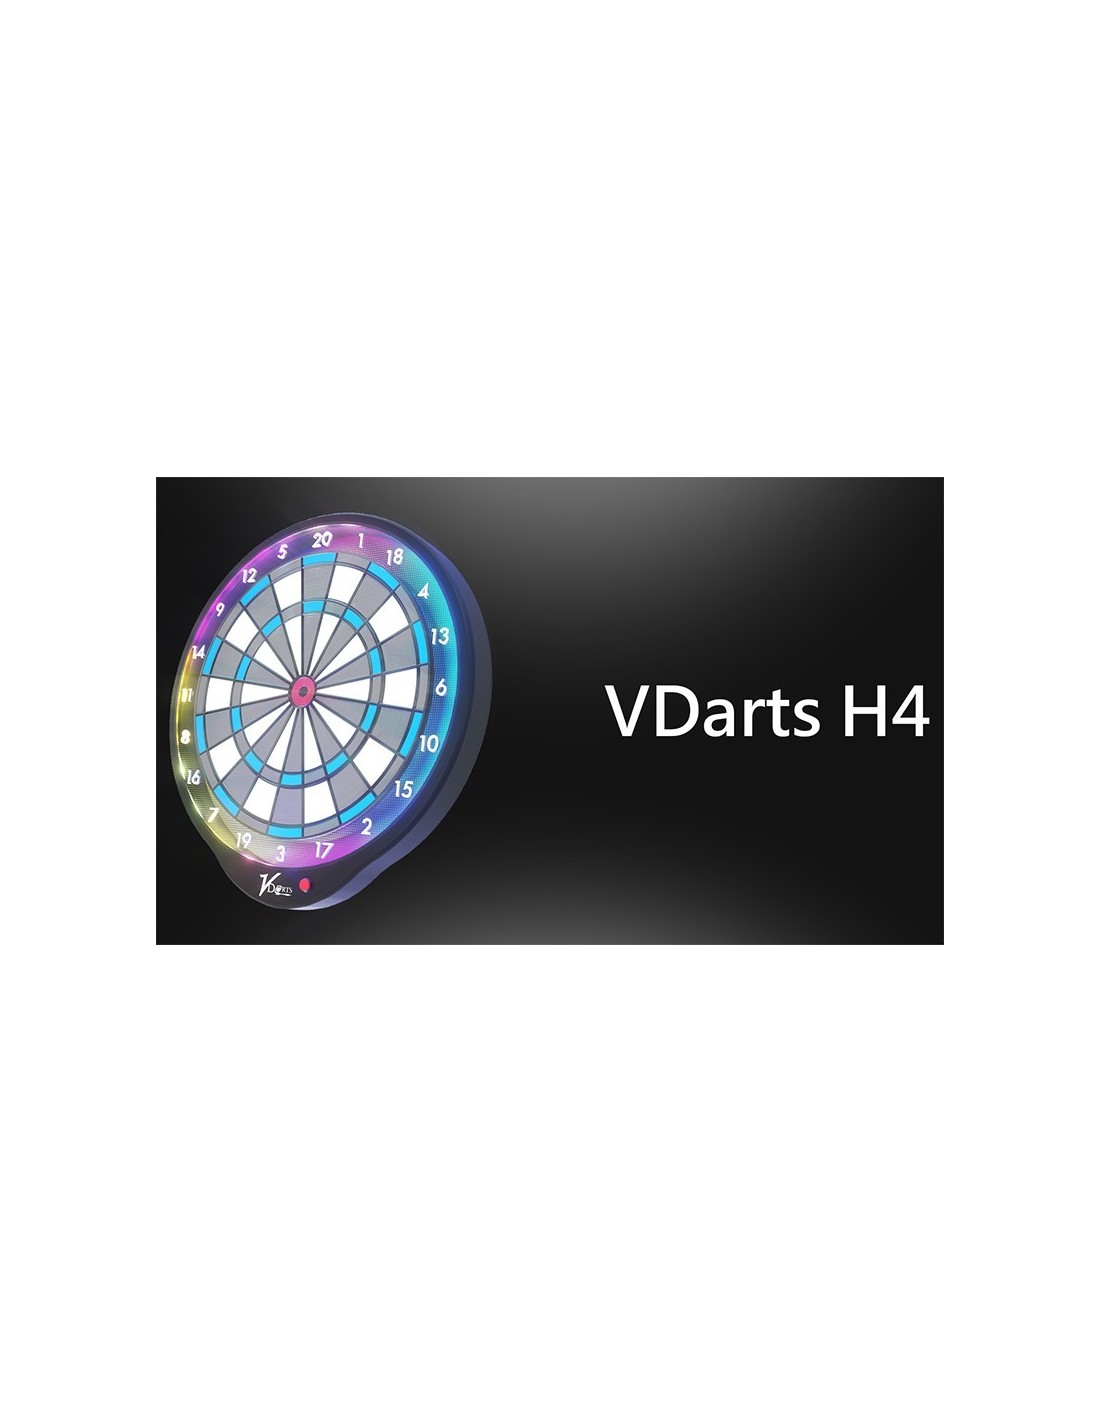 vdarts-H4-online-electronic-dartboard